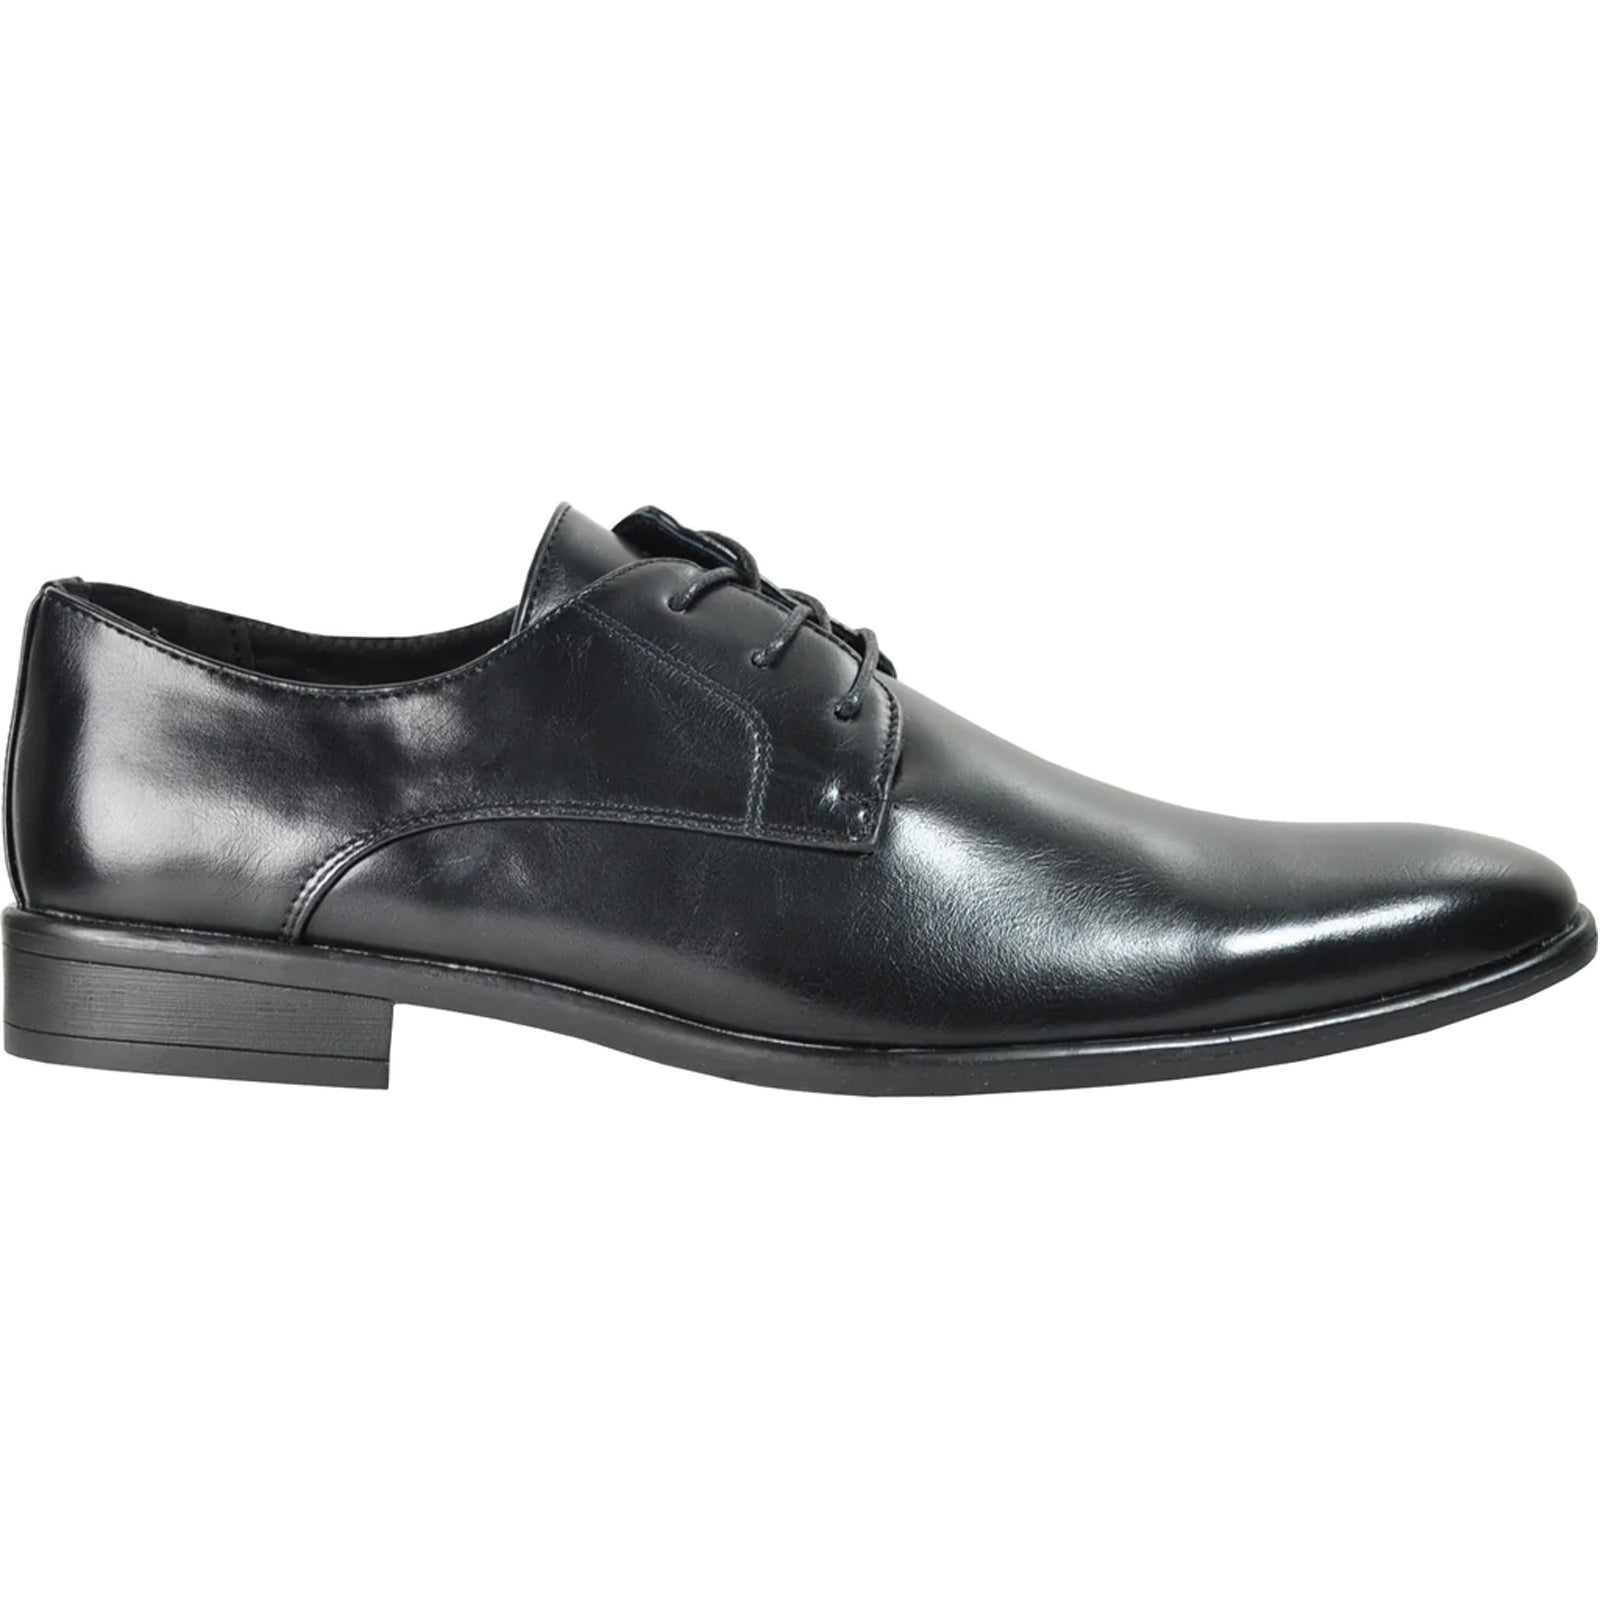 "Black Oxford Dress Shoe - Men's Pointed Plain Toe Style"